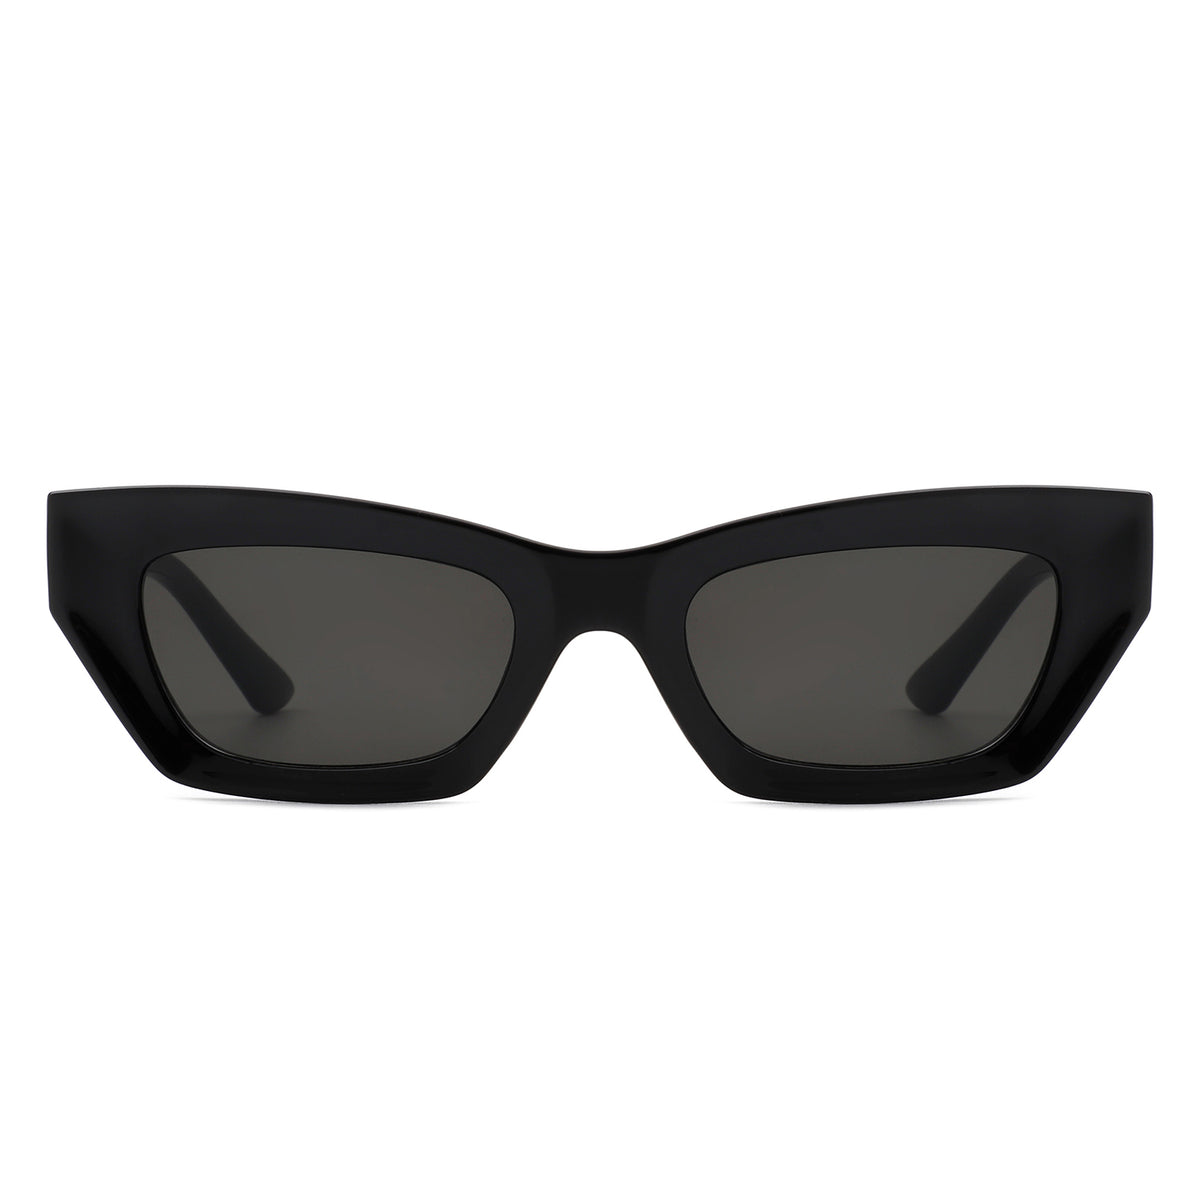 HS1128 - Rectangle Slim Retro Narrow Fashion Square Sunglasses